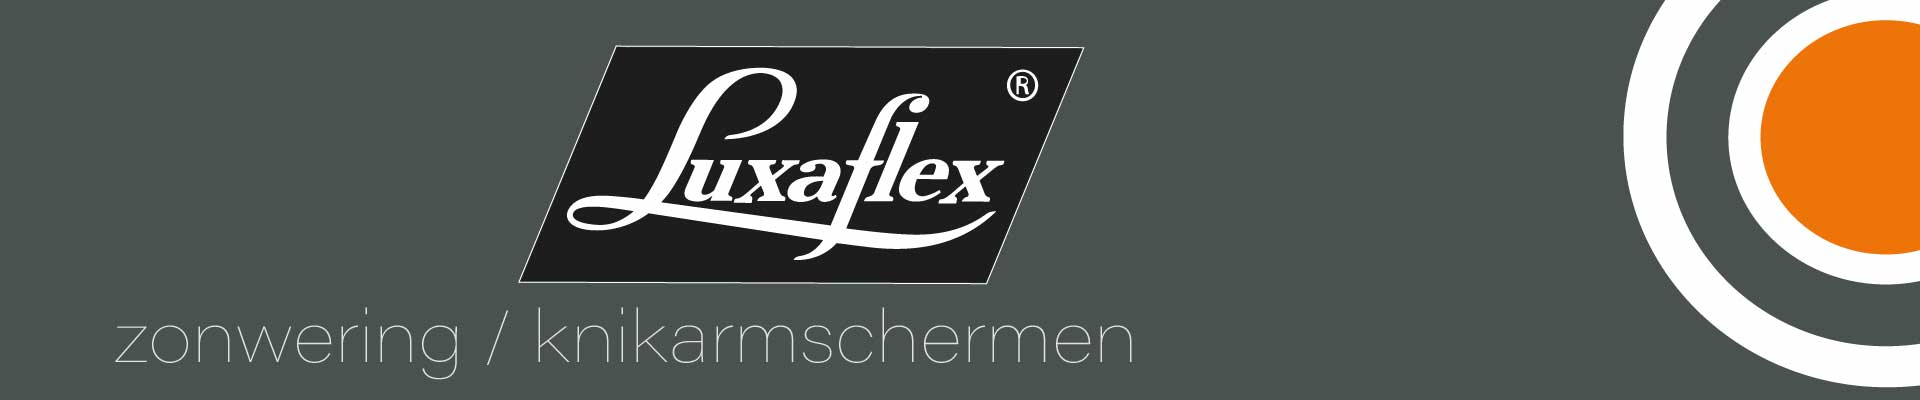 Luxaflex dealer voor o.a. knikarmschermen: Voorberg Zonwering BV